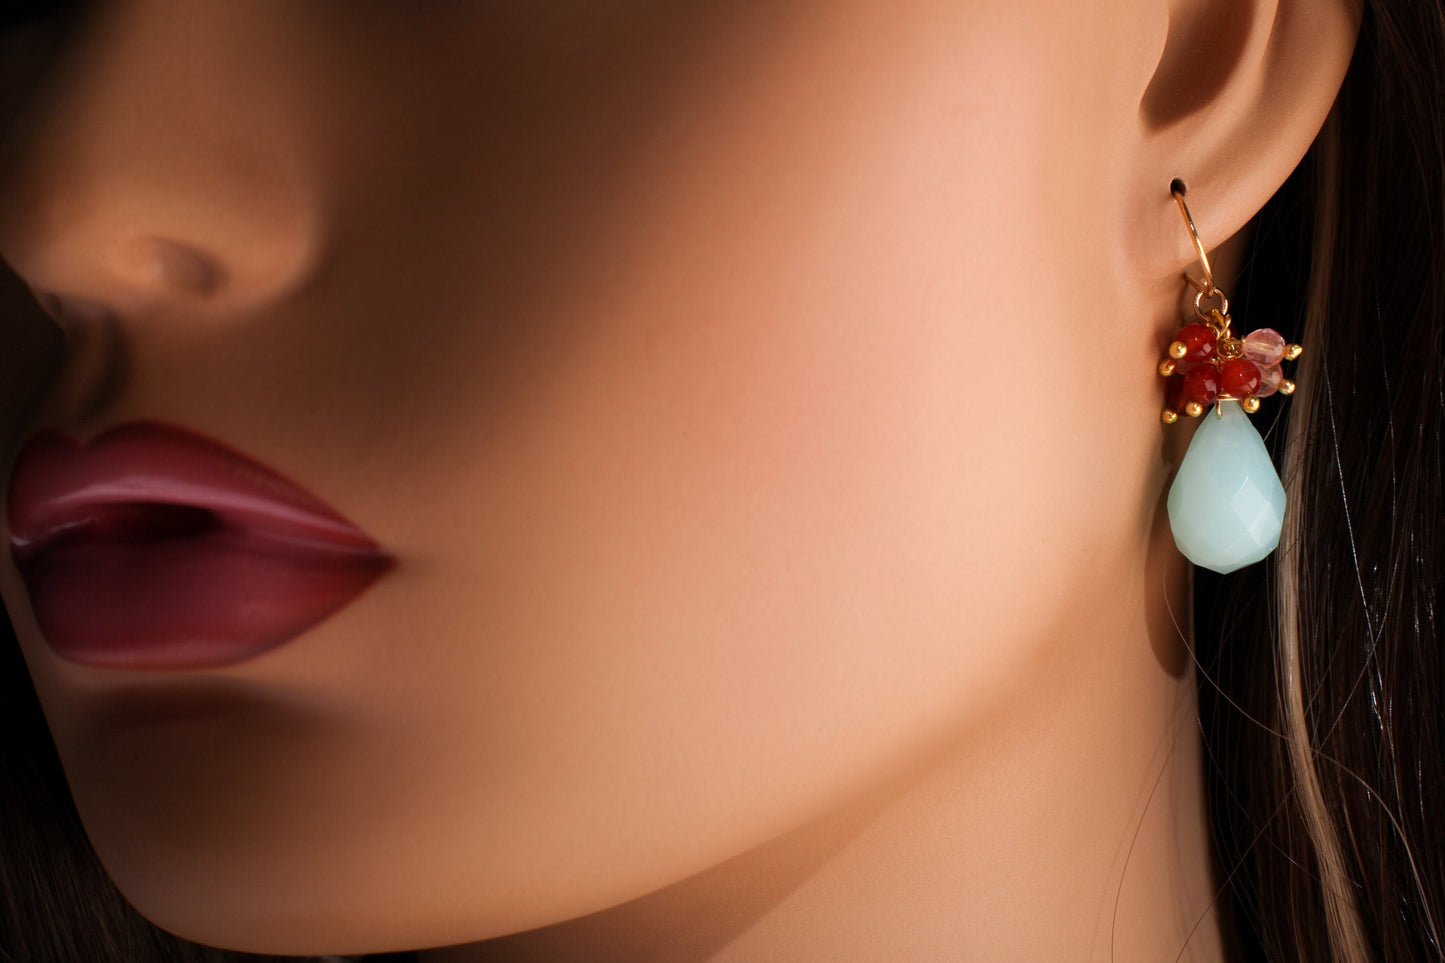 SALE ..Aqua Chalcedony 13x18mm Faceted Drop Cluster Earring, Carnelian Agate, Strawberry Quartz in Gold Vermeil Earrings